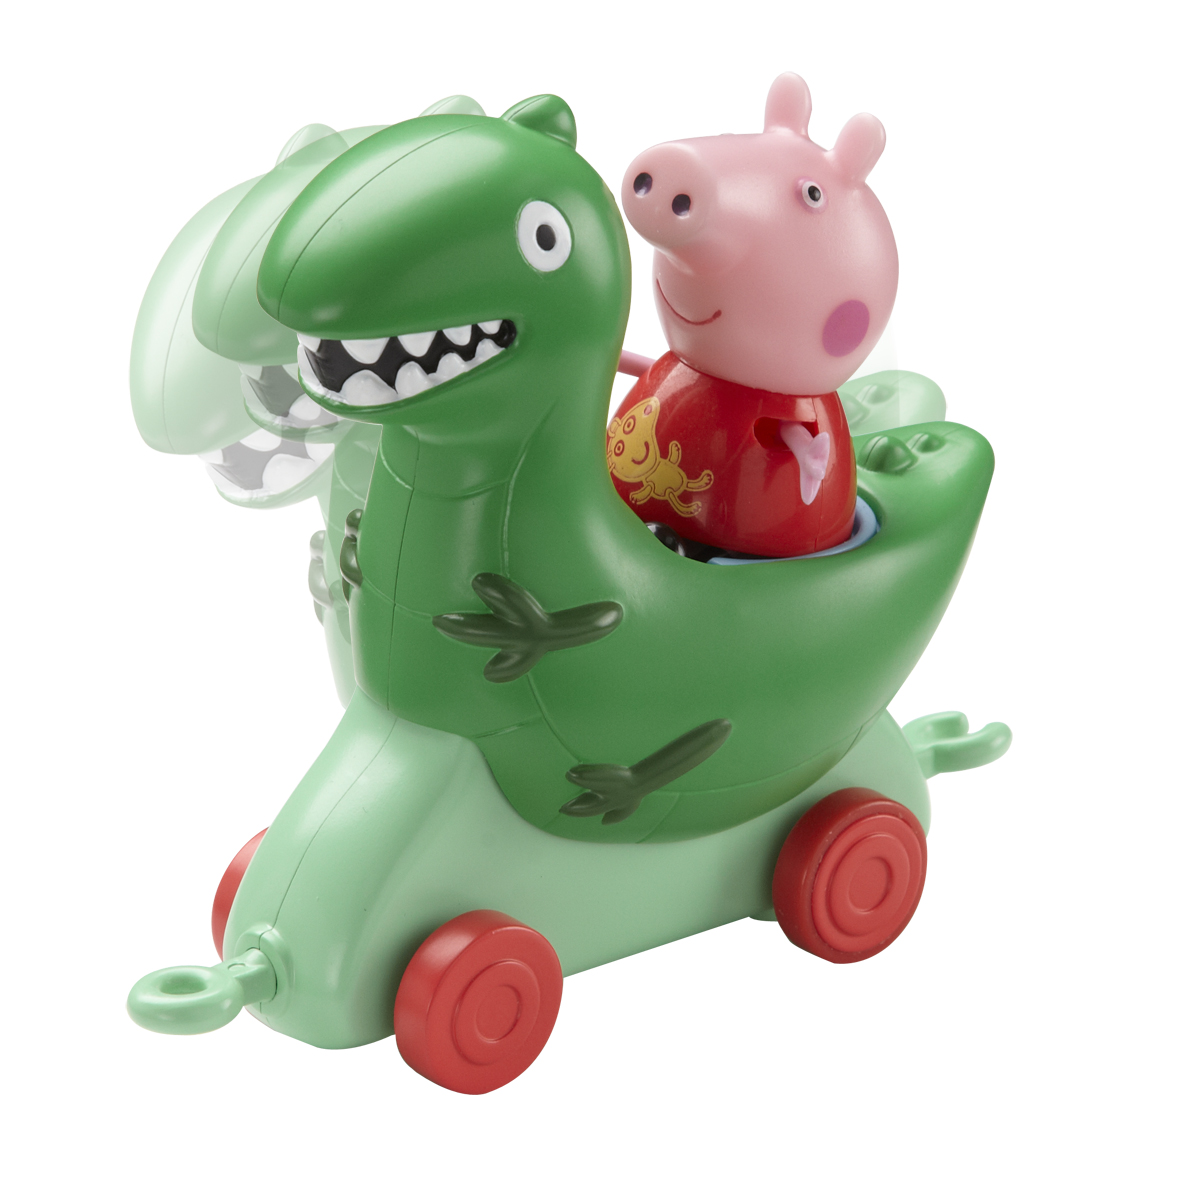 Peppa Pig Fun Park Vehicle - Dinosaur and Peppa